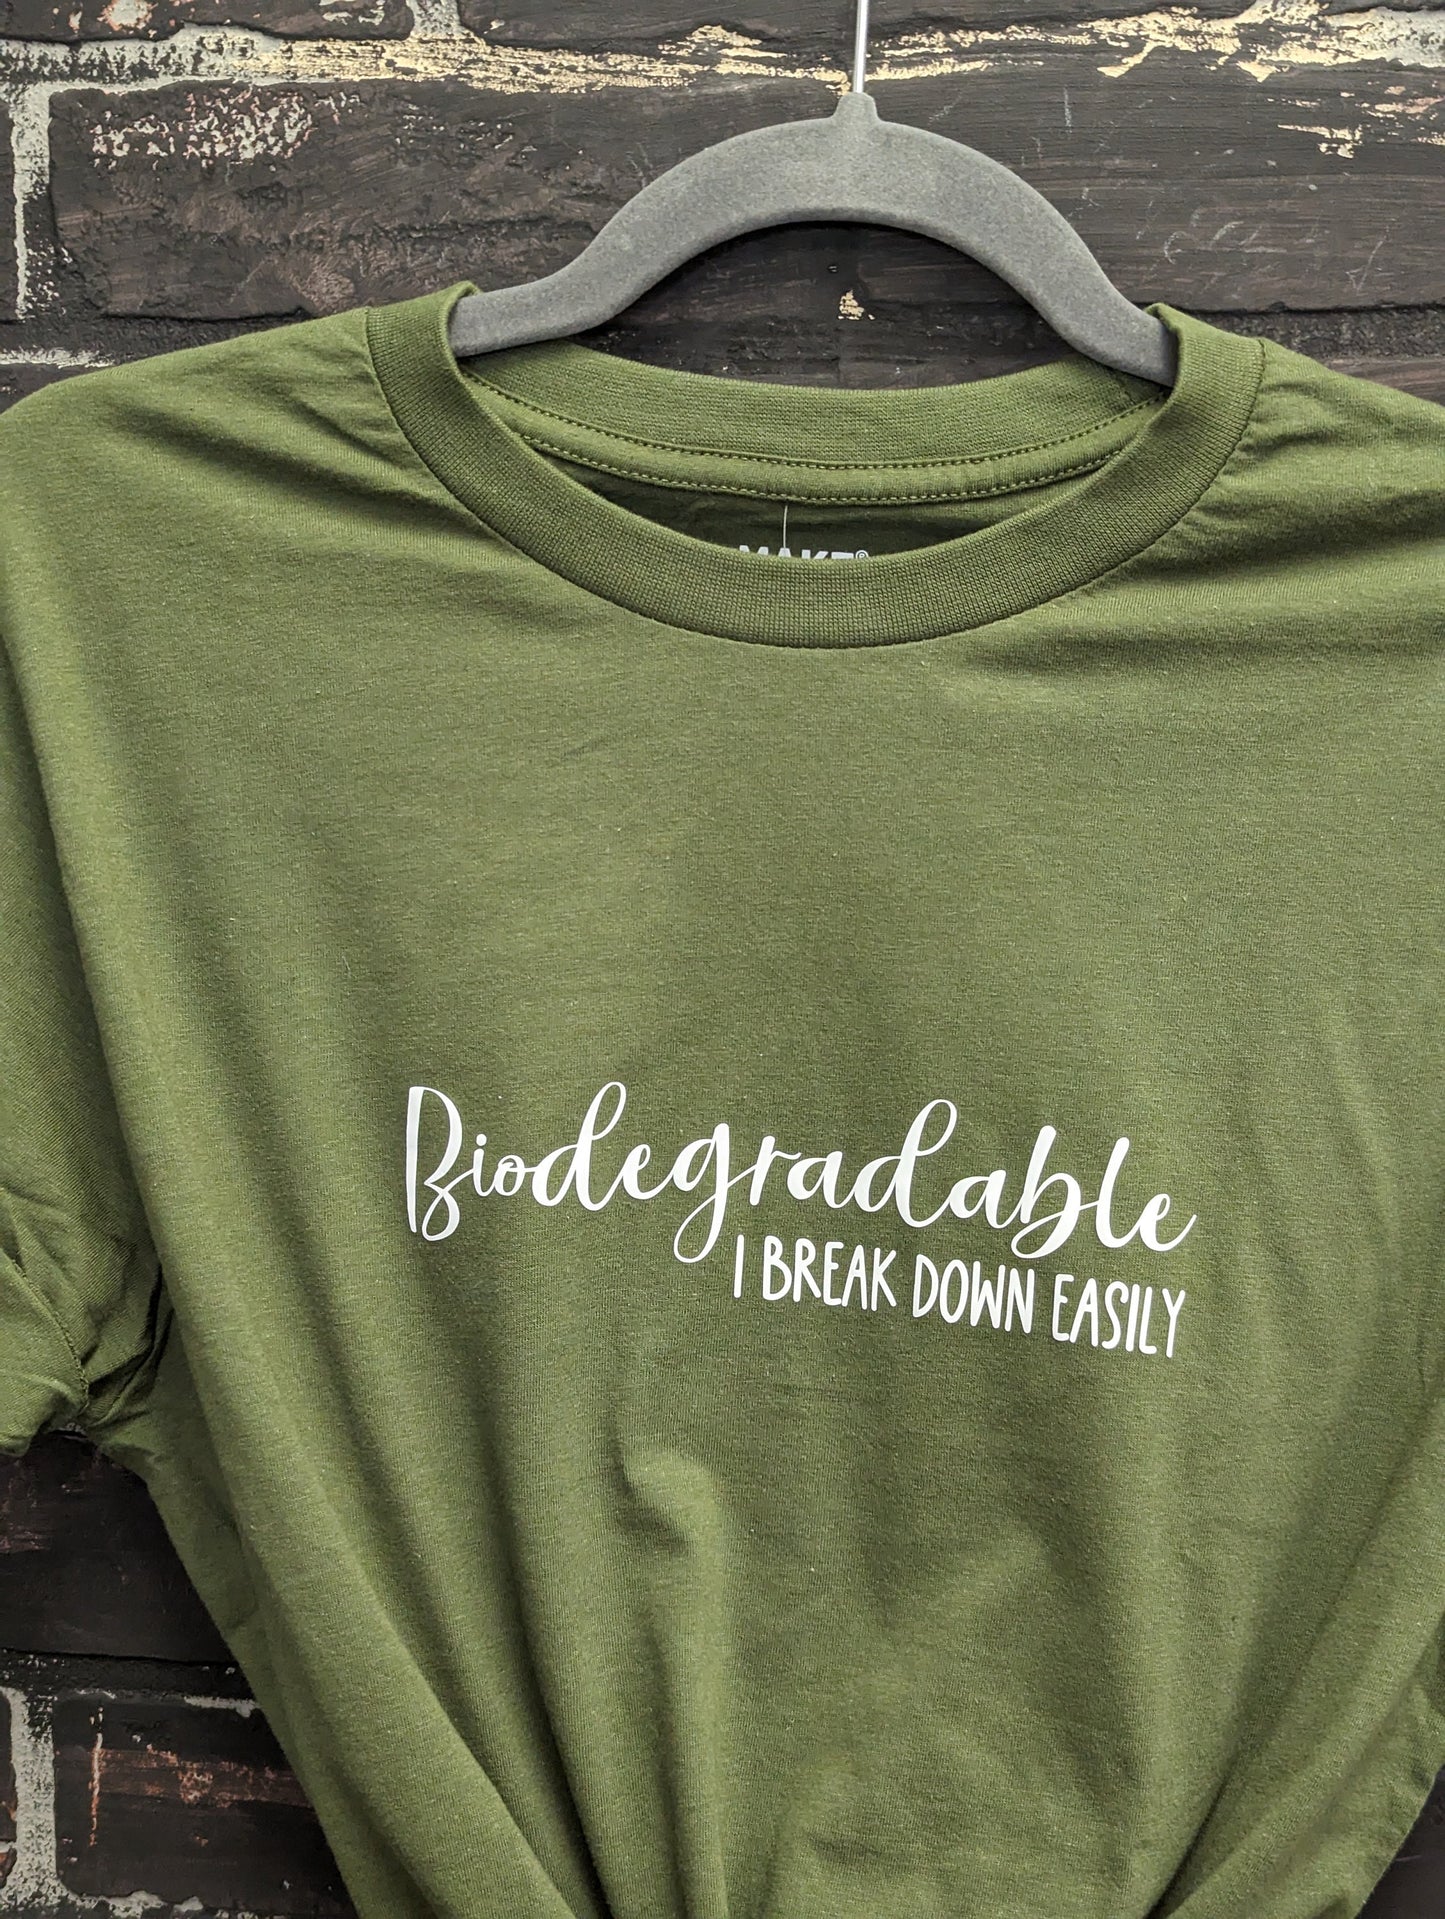 Biodegradable I fall apart easy, Green T-shirt